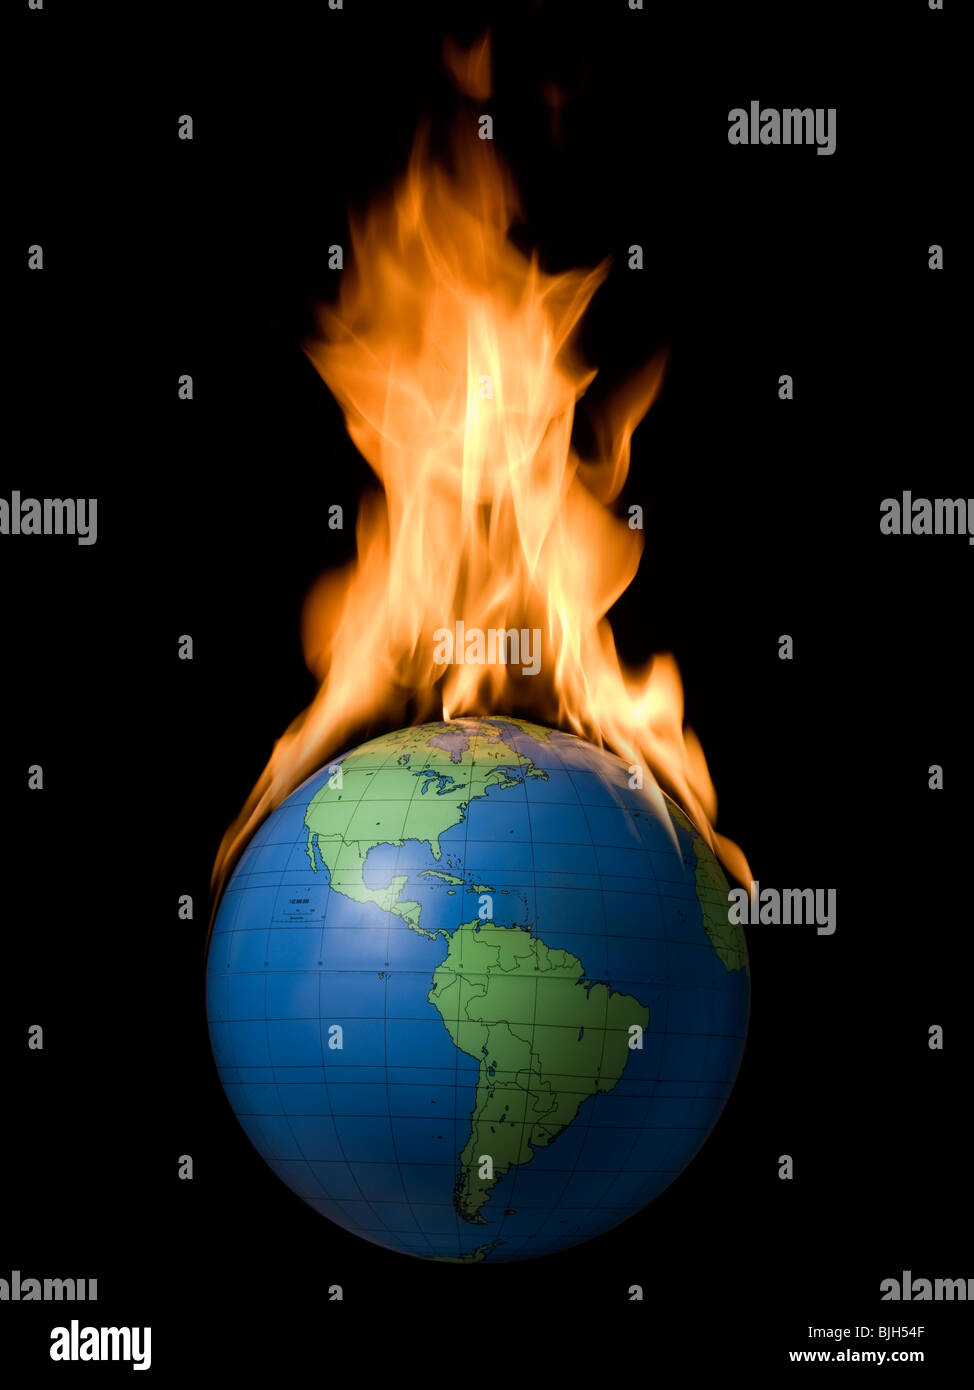 globe on fire Stock Photo